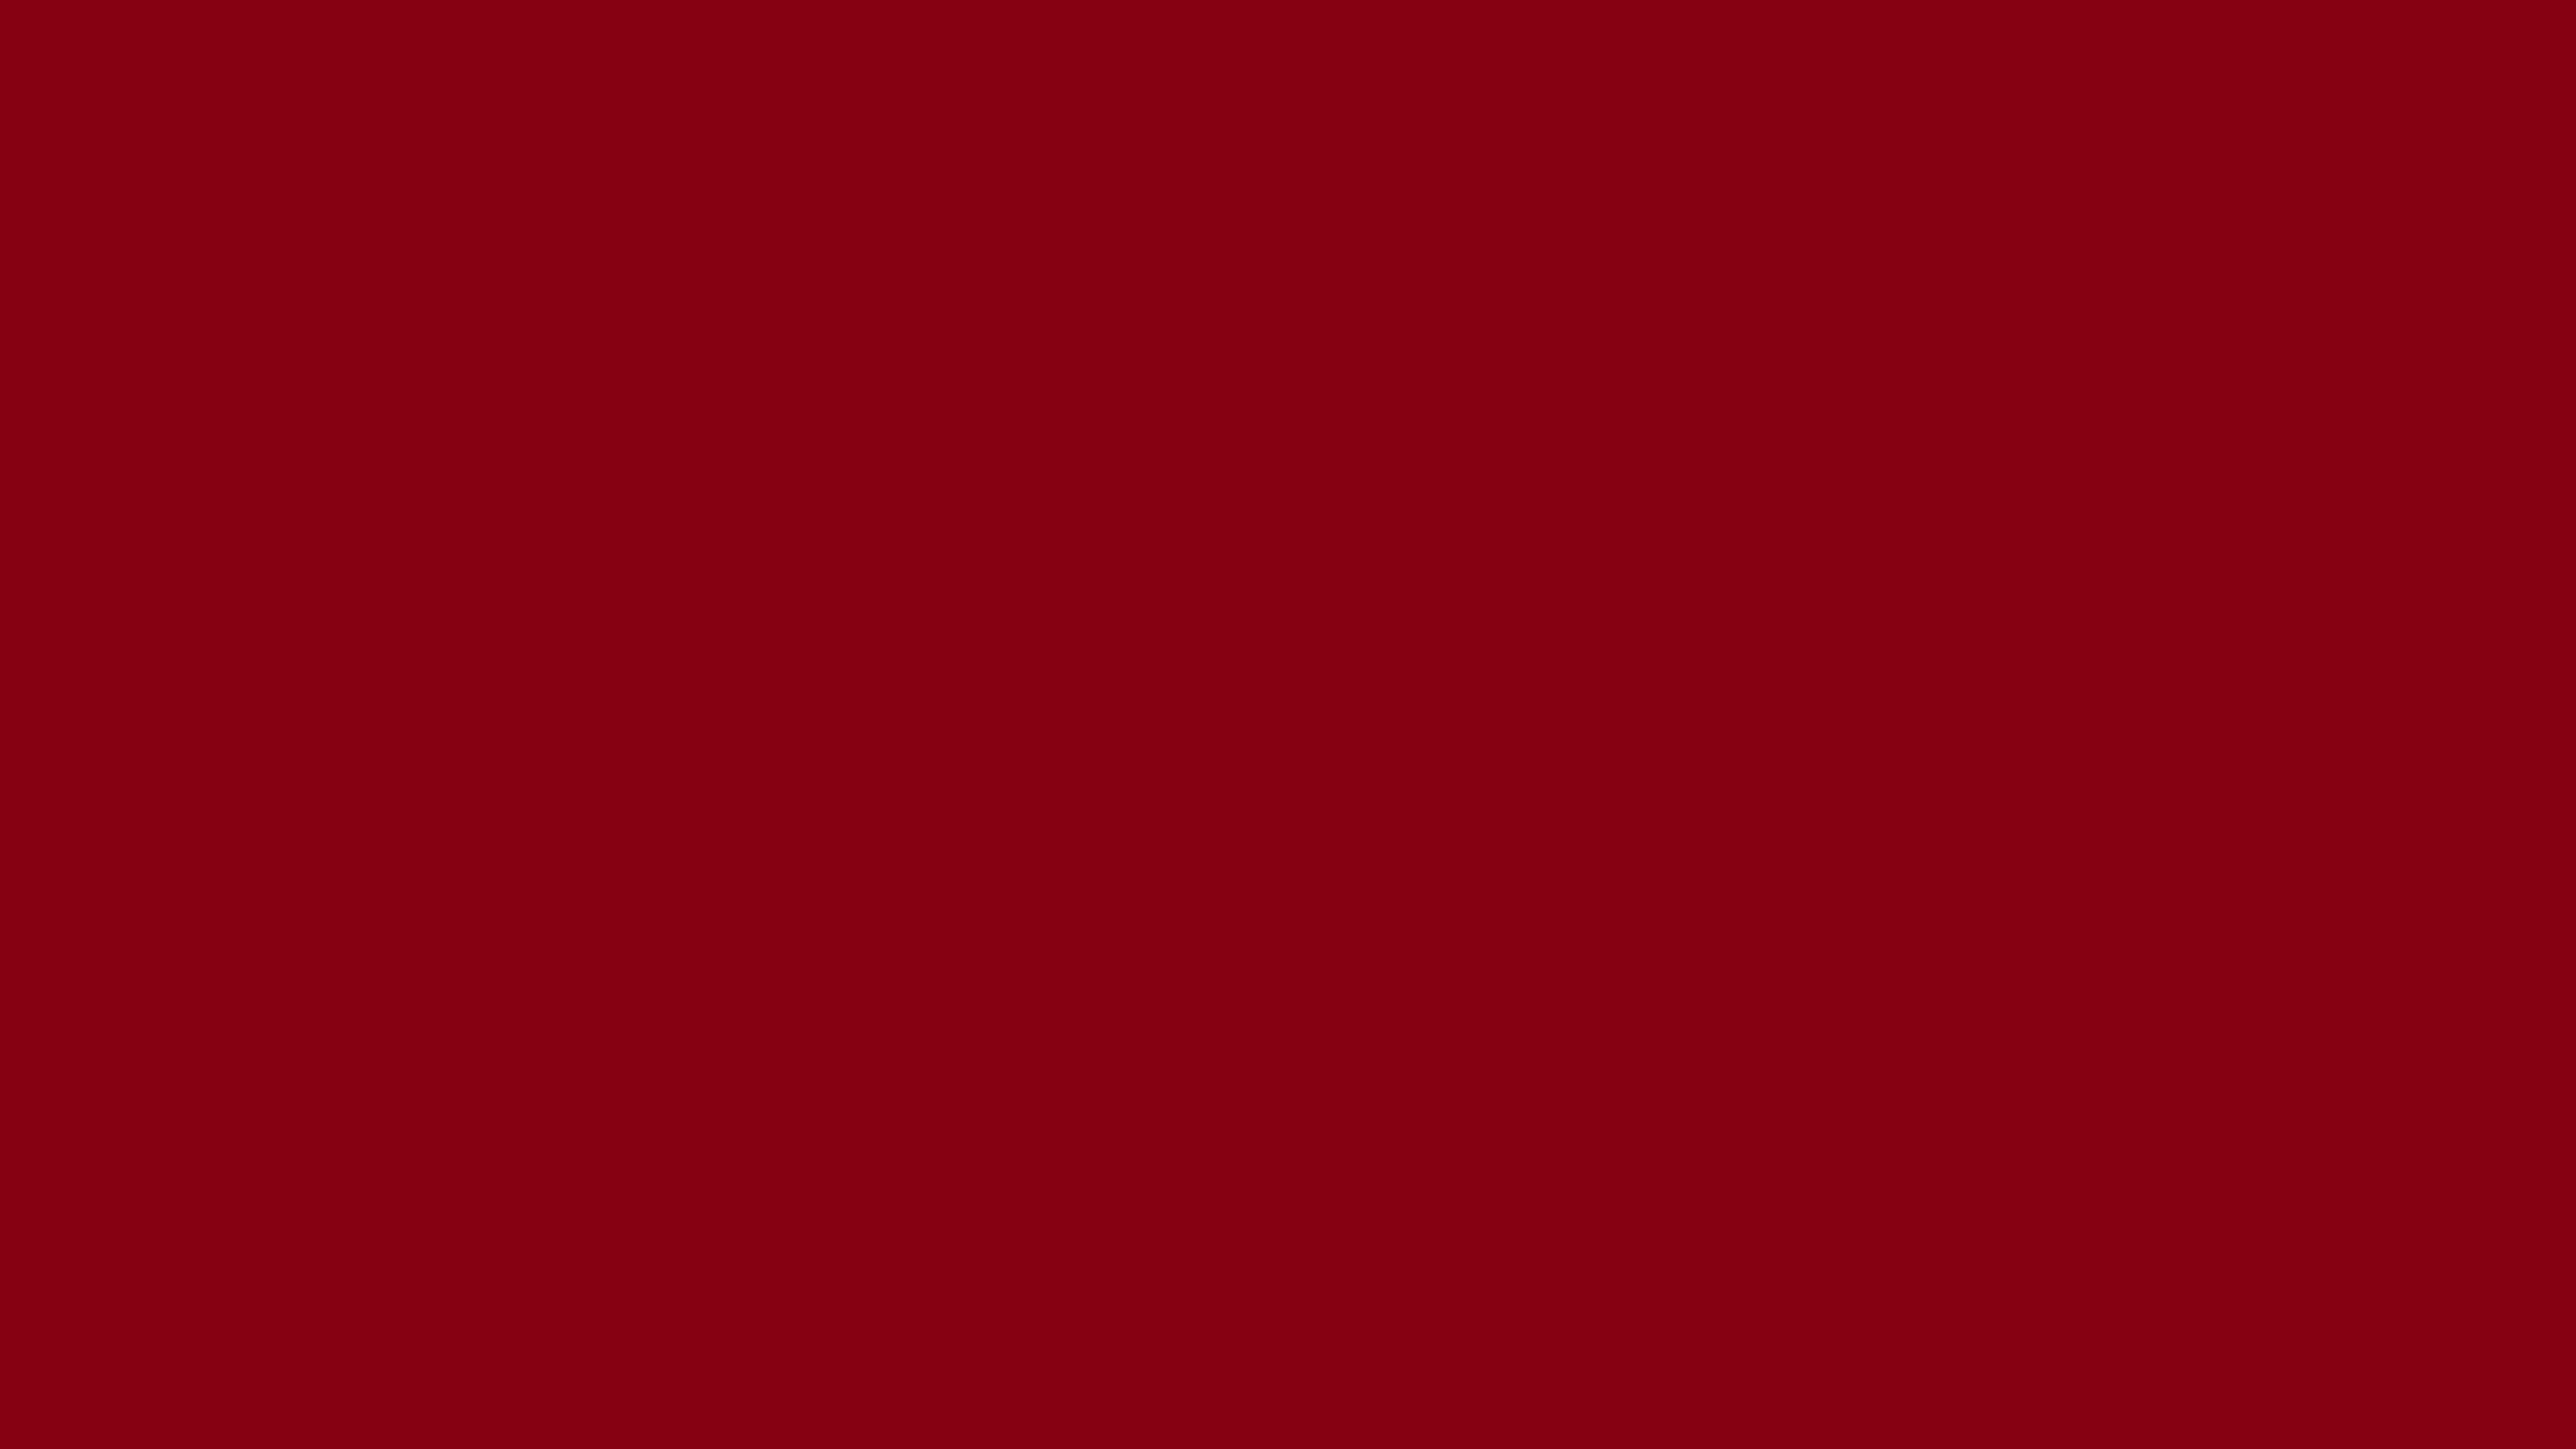 5120x2880 Red Devil Solid Color Background